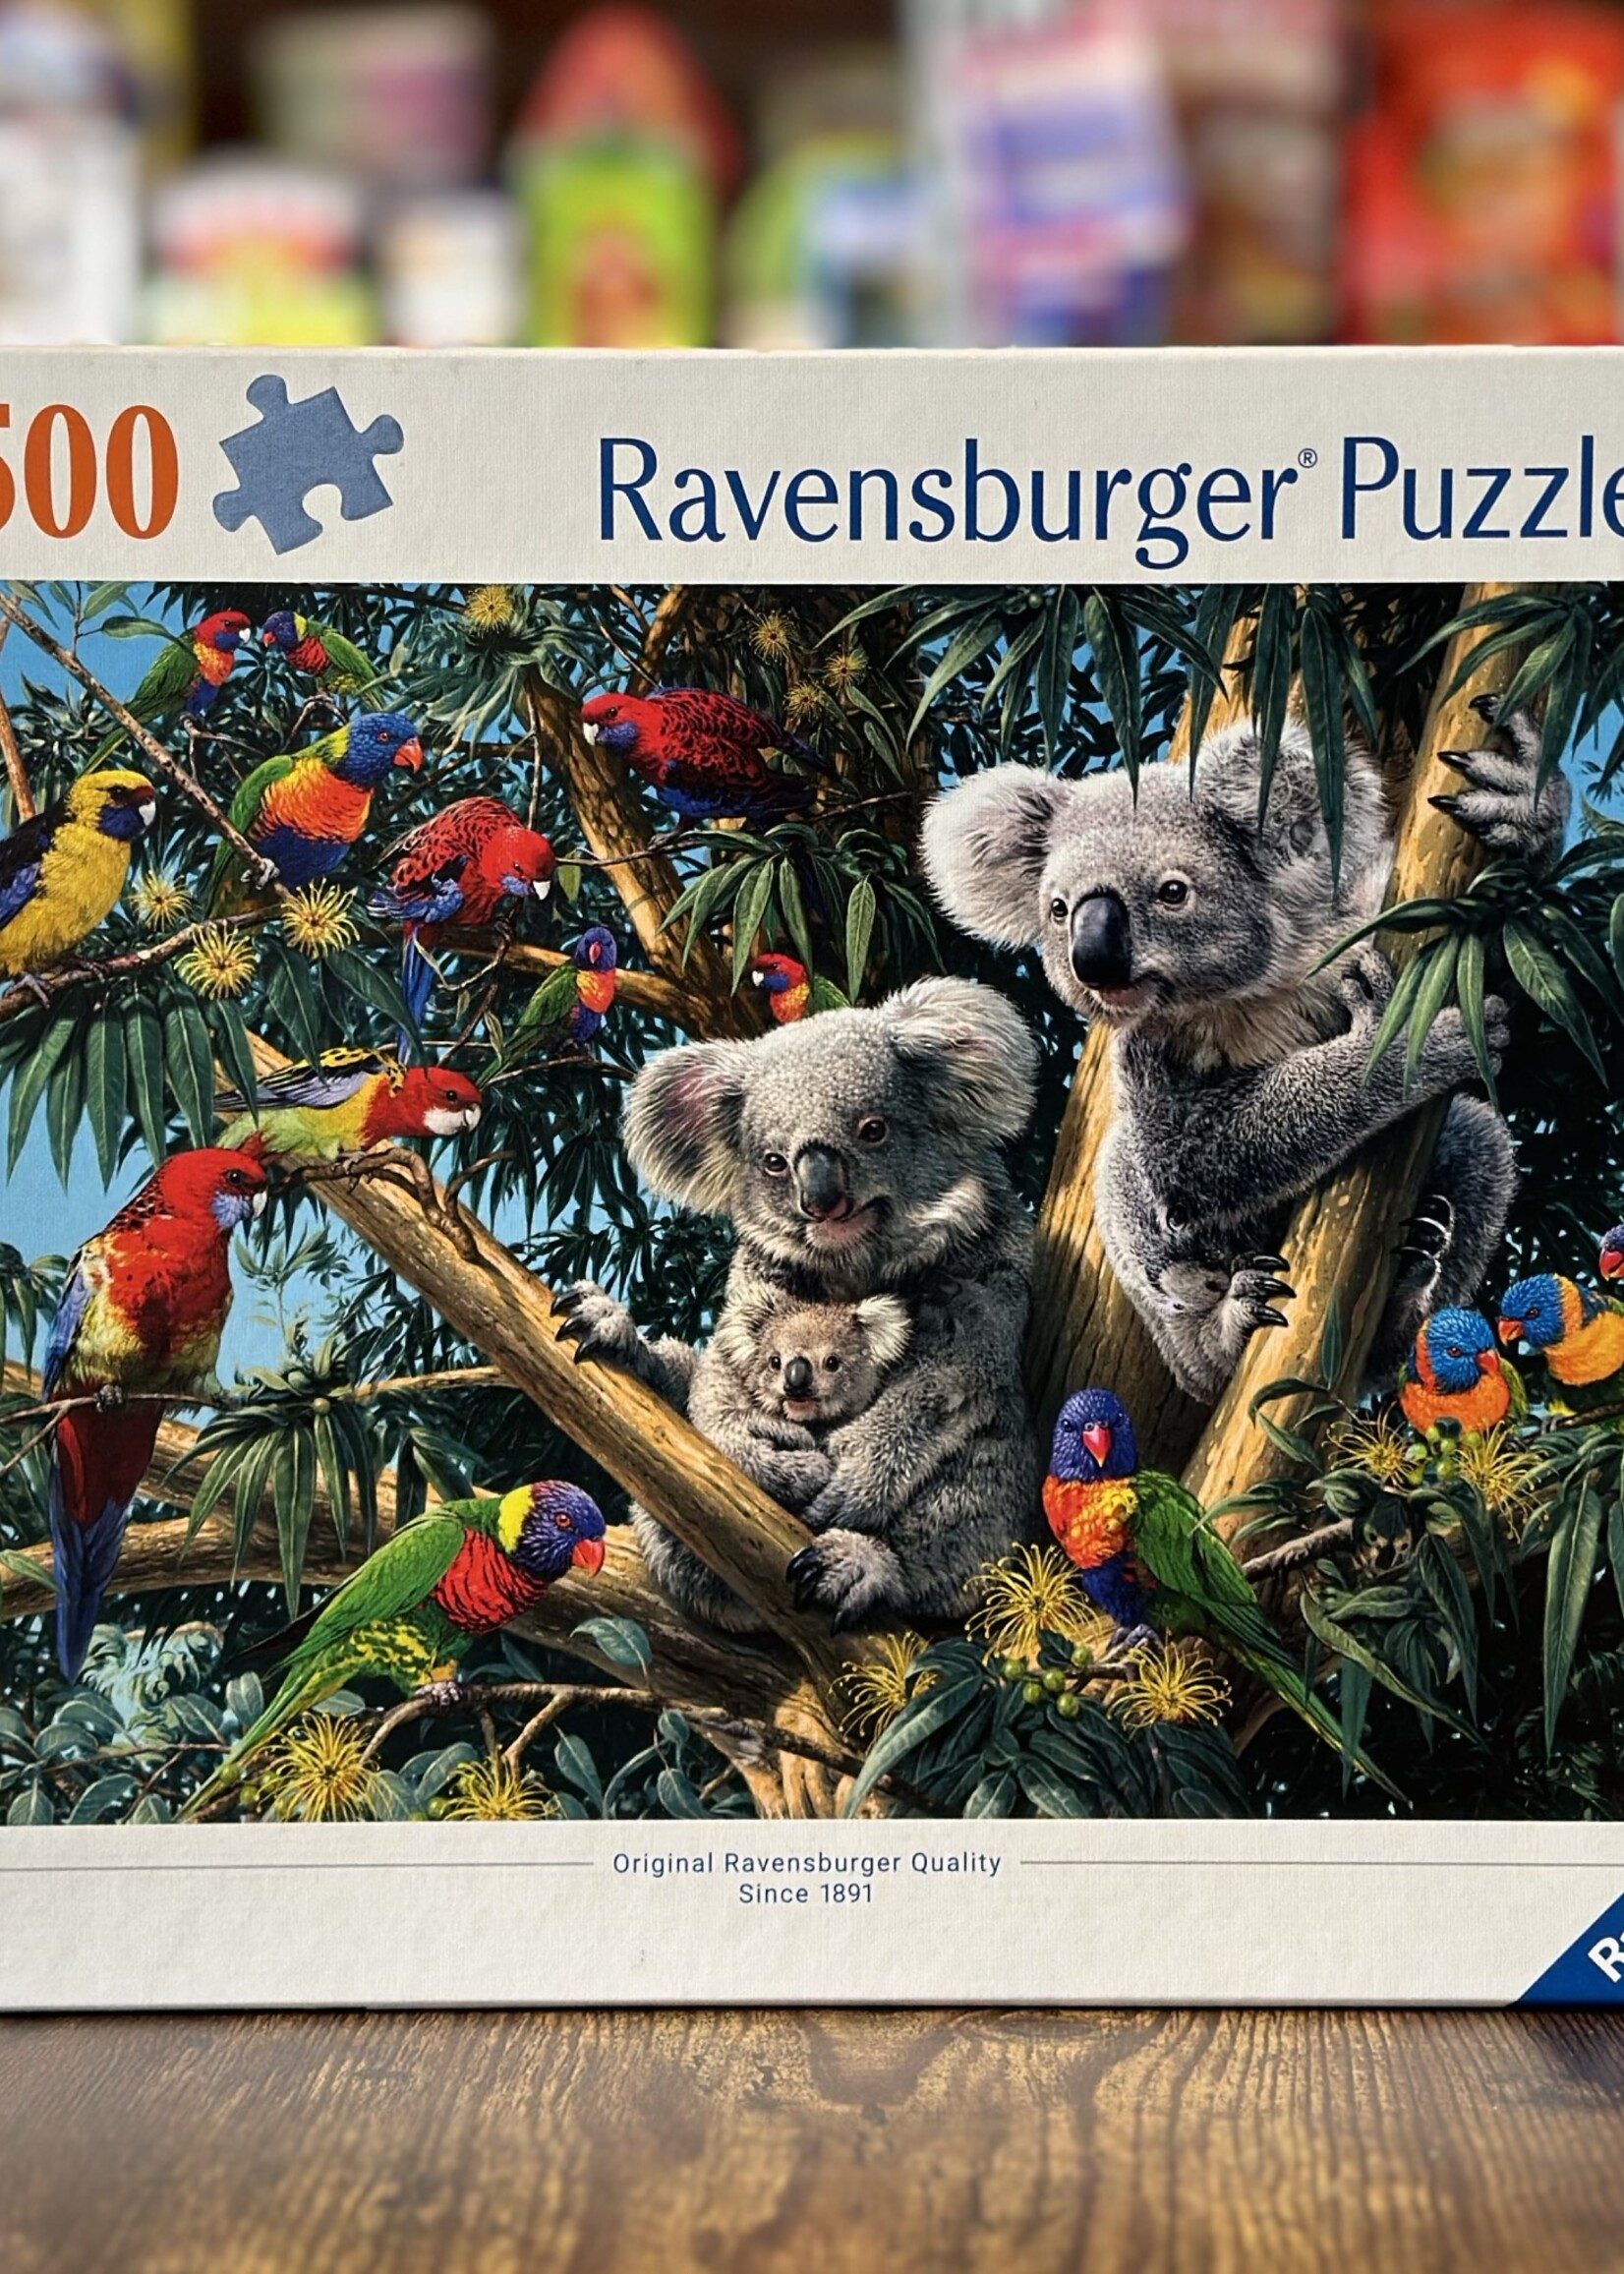 Ravensburger Puzzle - Koalas in a Tree 500 Pc.